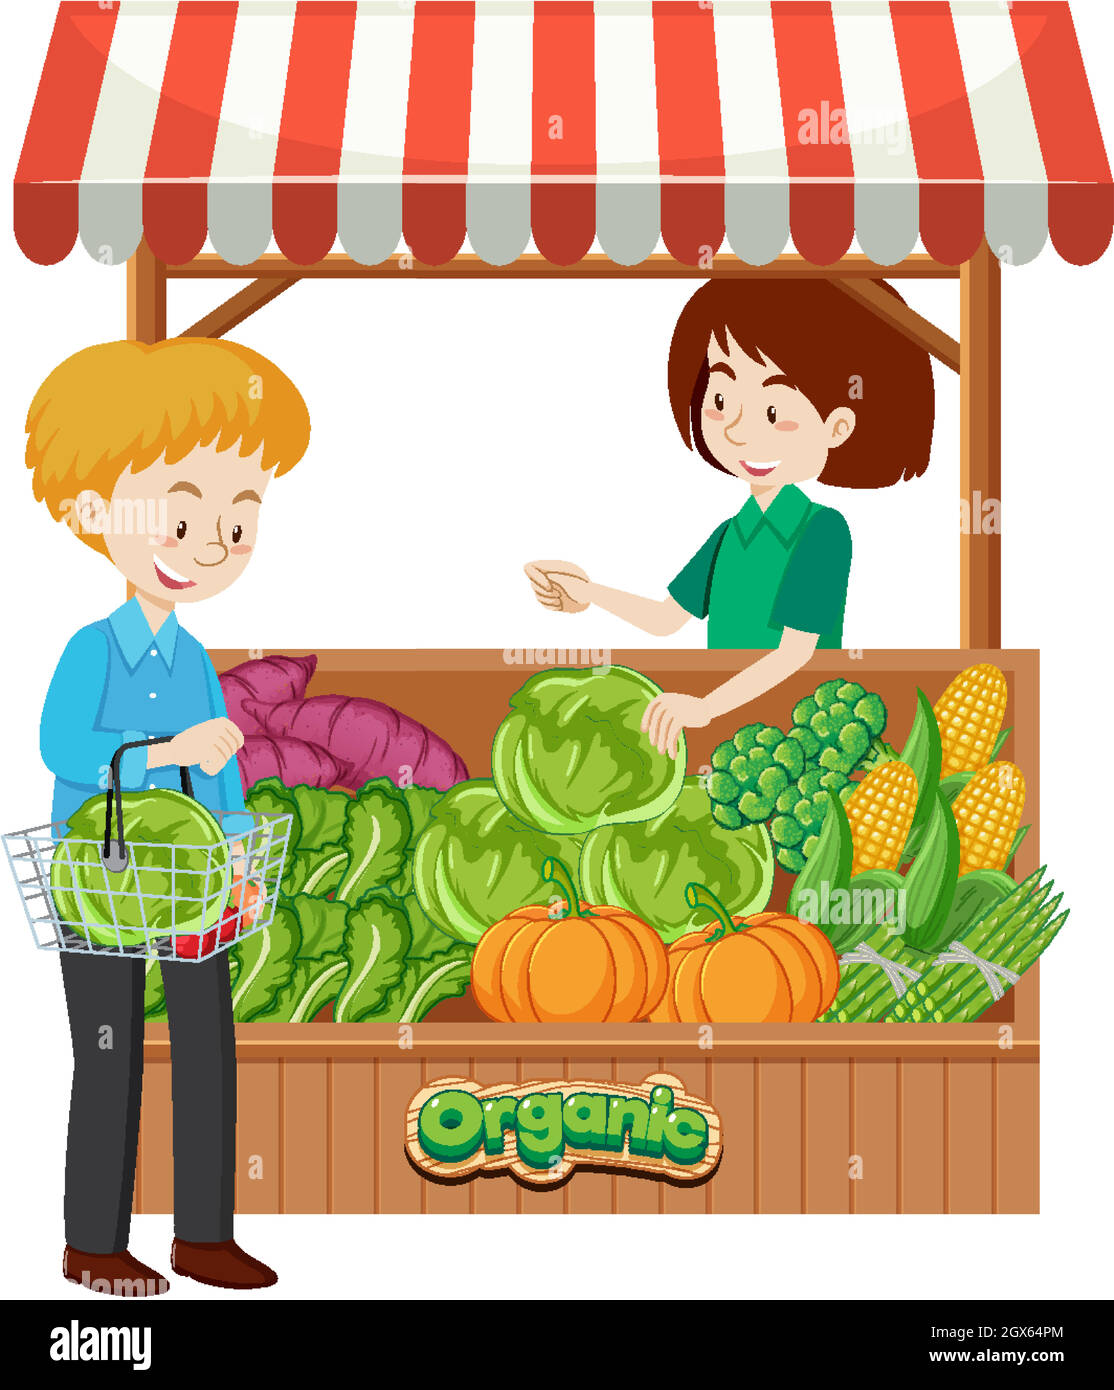 Outdoor vegetable vendor Stock Vector Images - Alamy